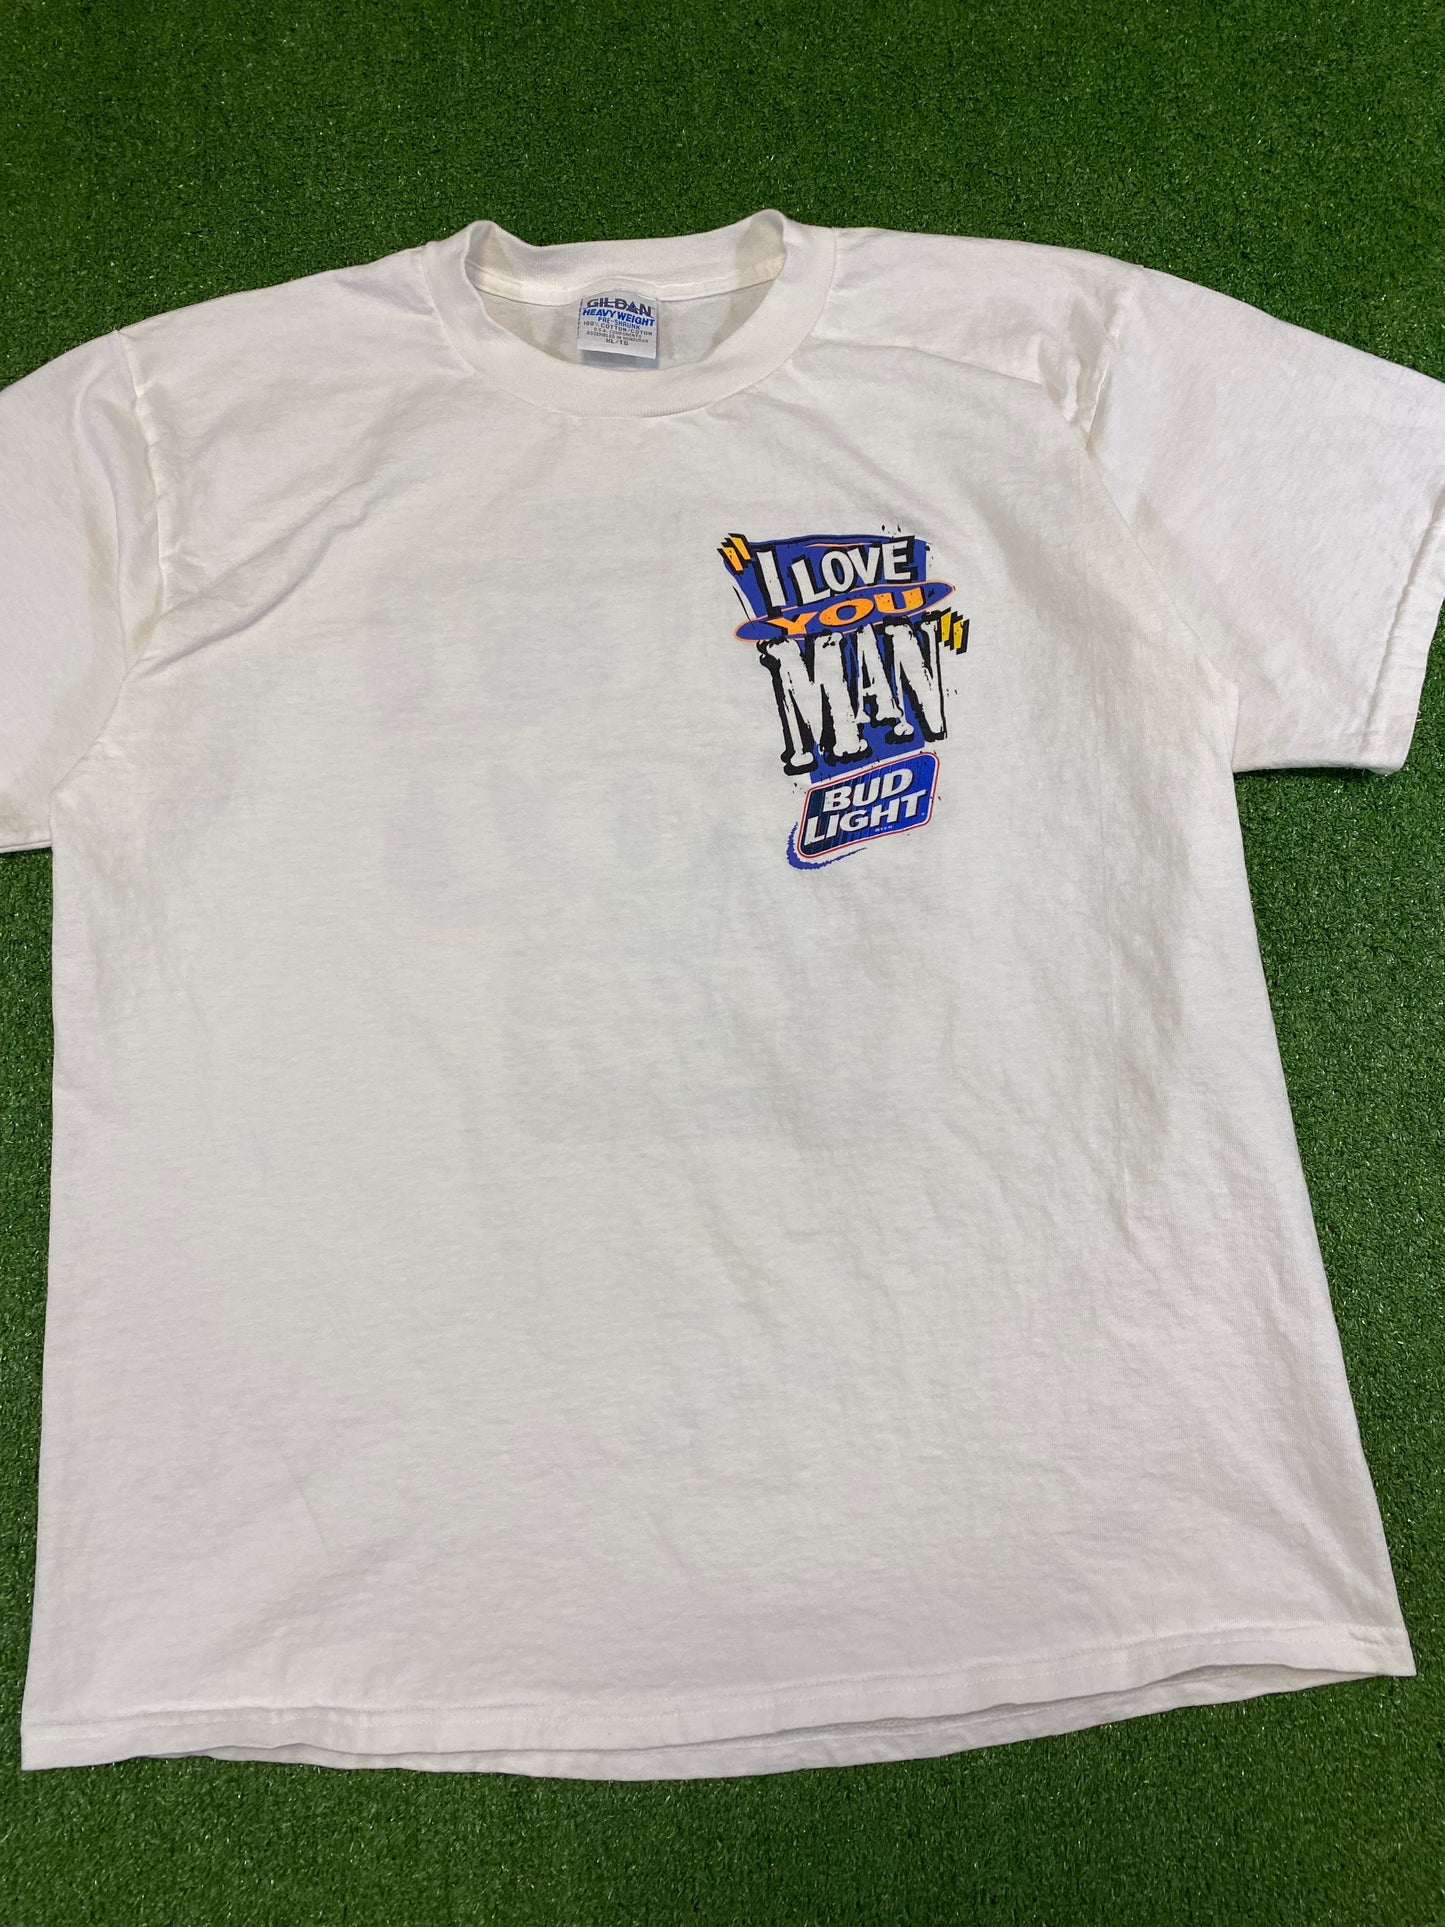 1996 Bud Light “I love you man” Commercial T-Shirt XL